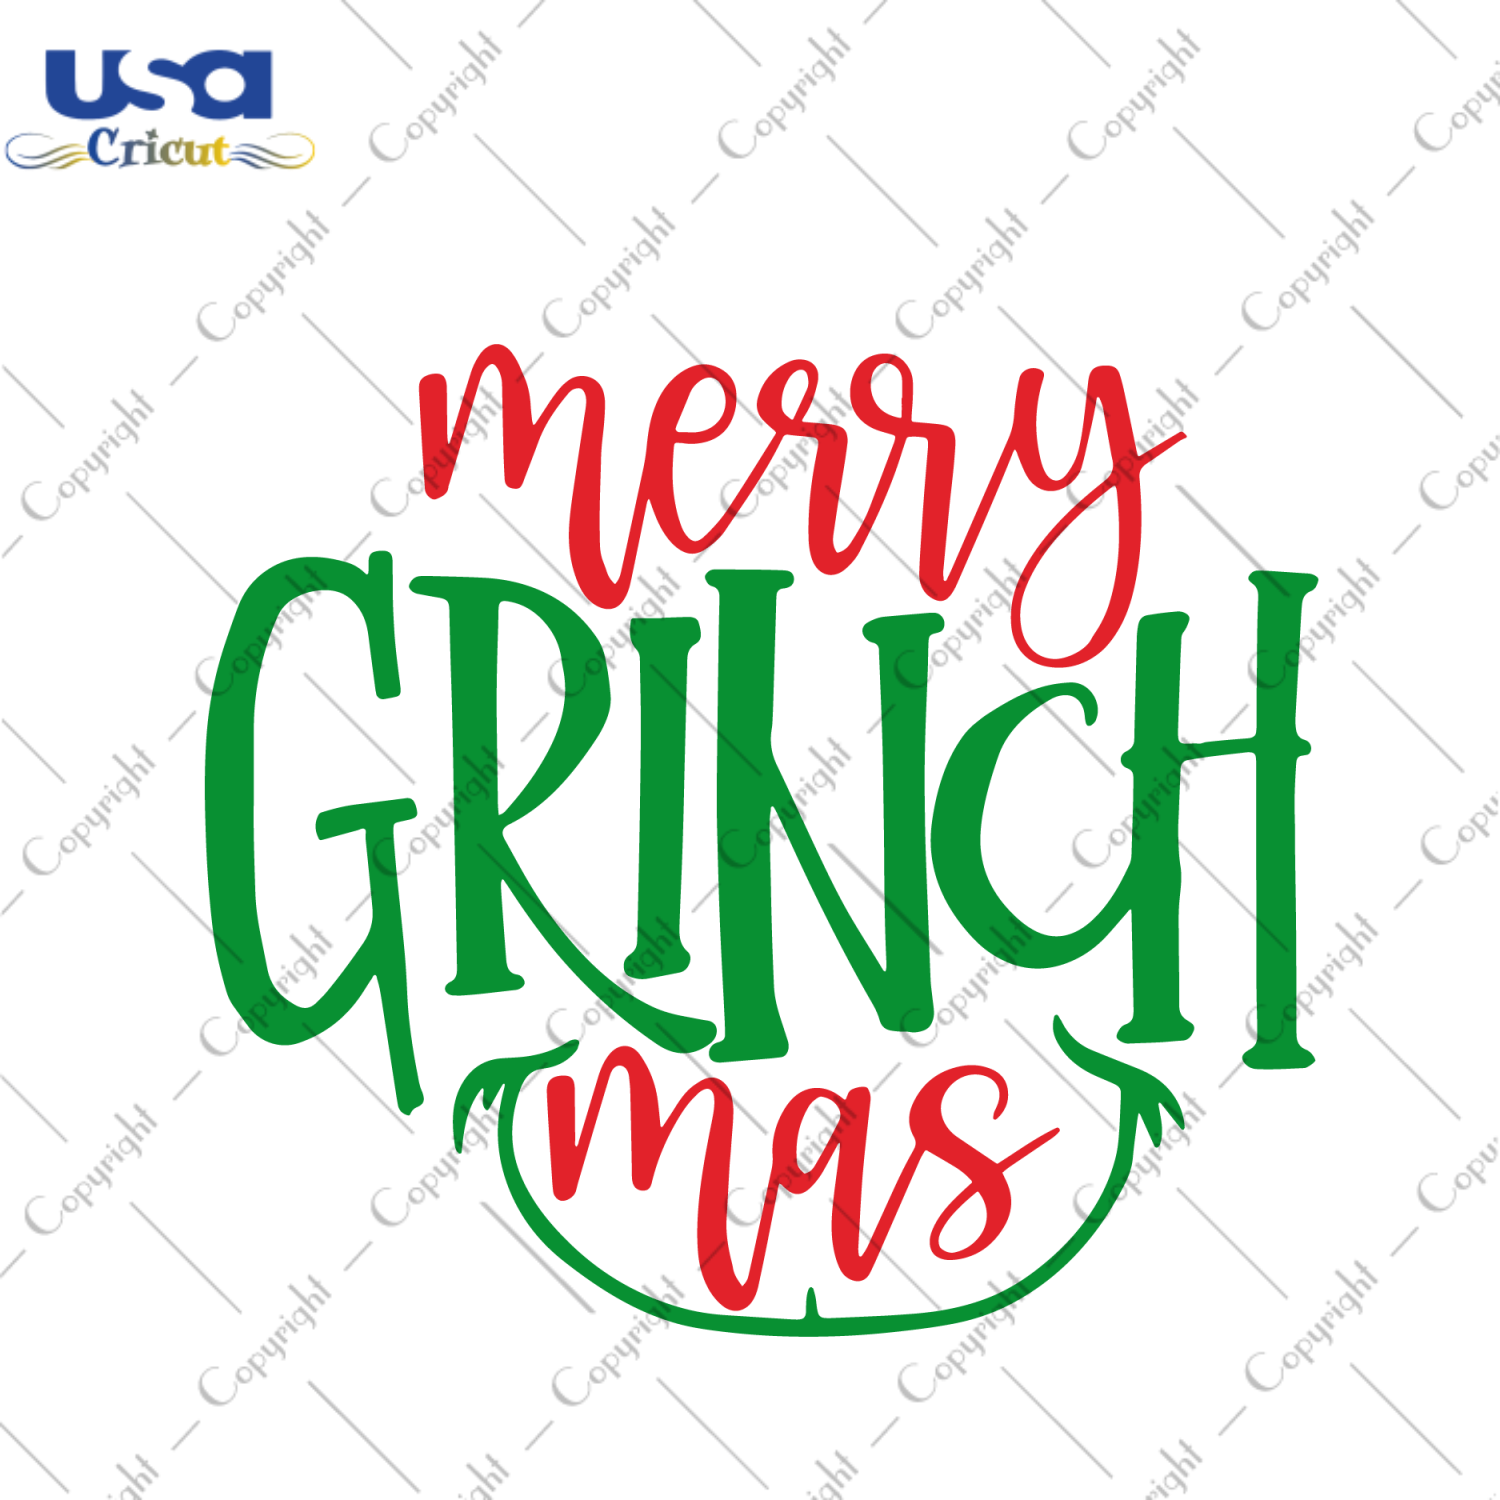 Merry Grinchmas, Christmas Svg, Merry Christmas, Grinch Svg, Stole Christmas Vector, Xmas Grinch Svg, Christmas Movie Svg, Merry Grinchmas Shirts, Grinch Shirt Svg, Grinch Vector, Christmas P